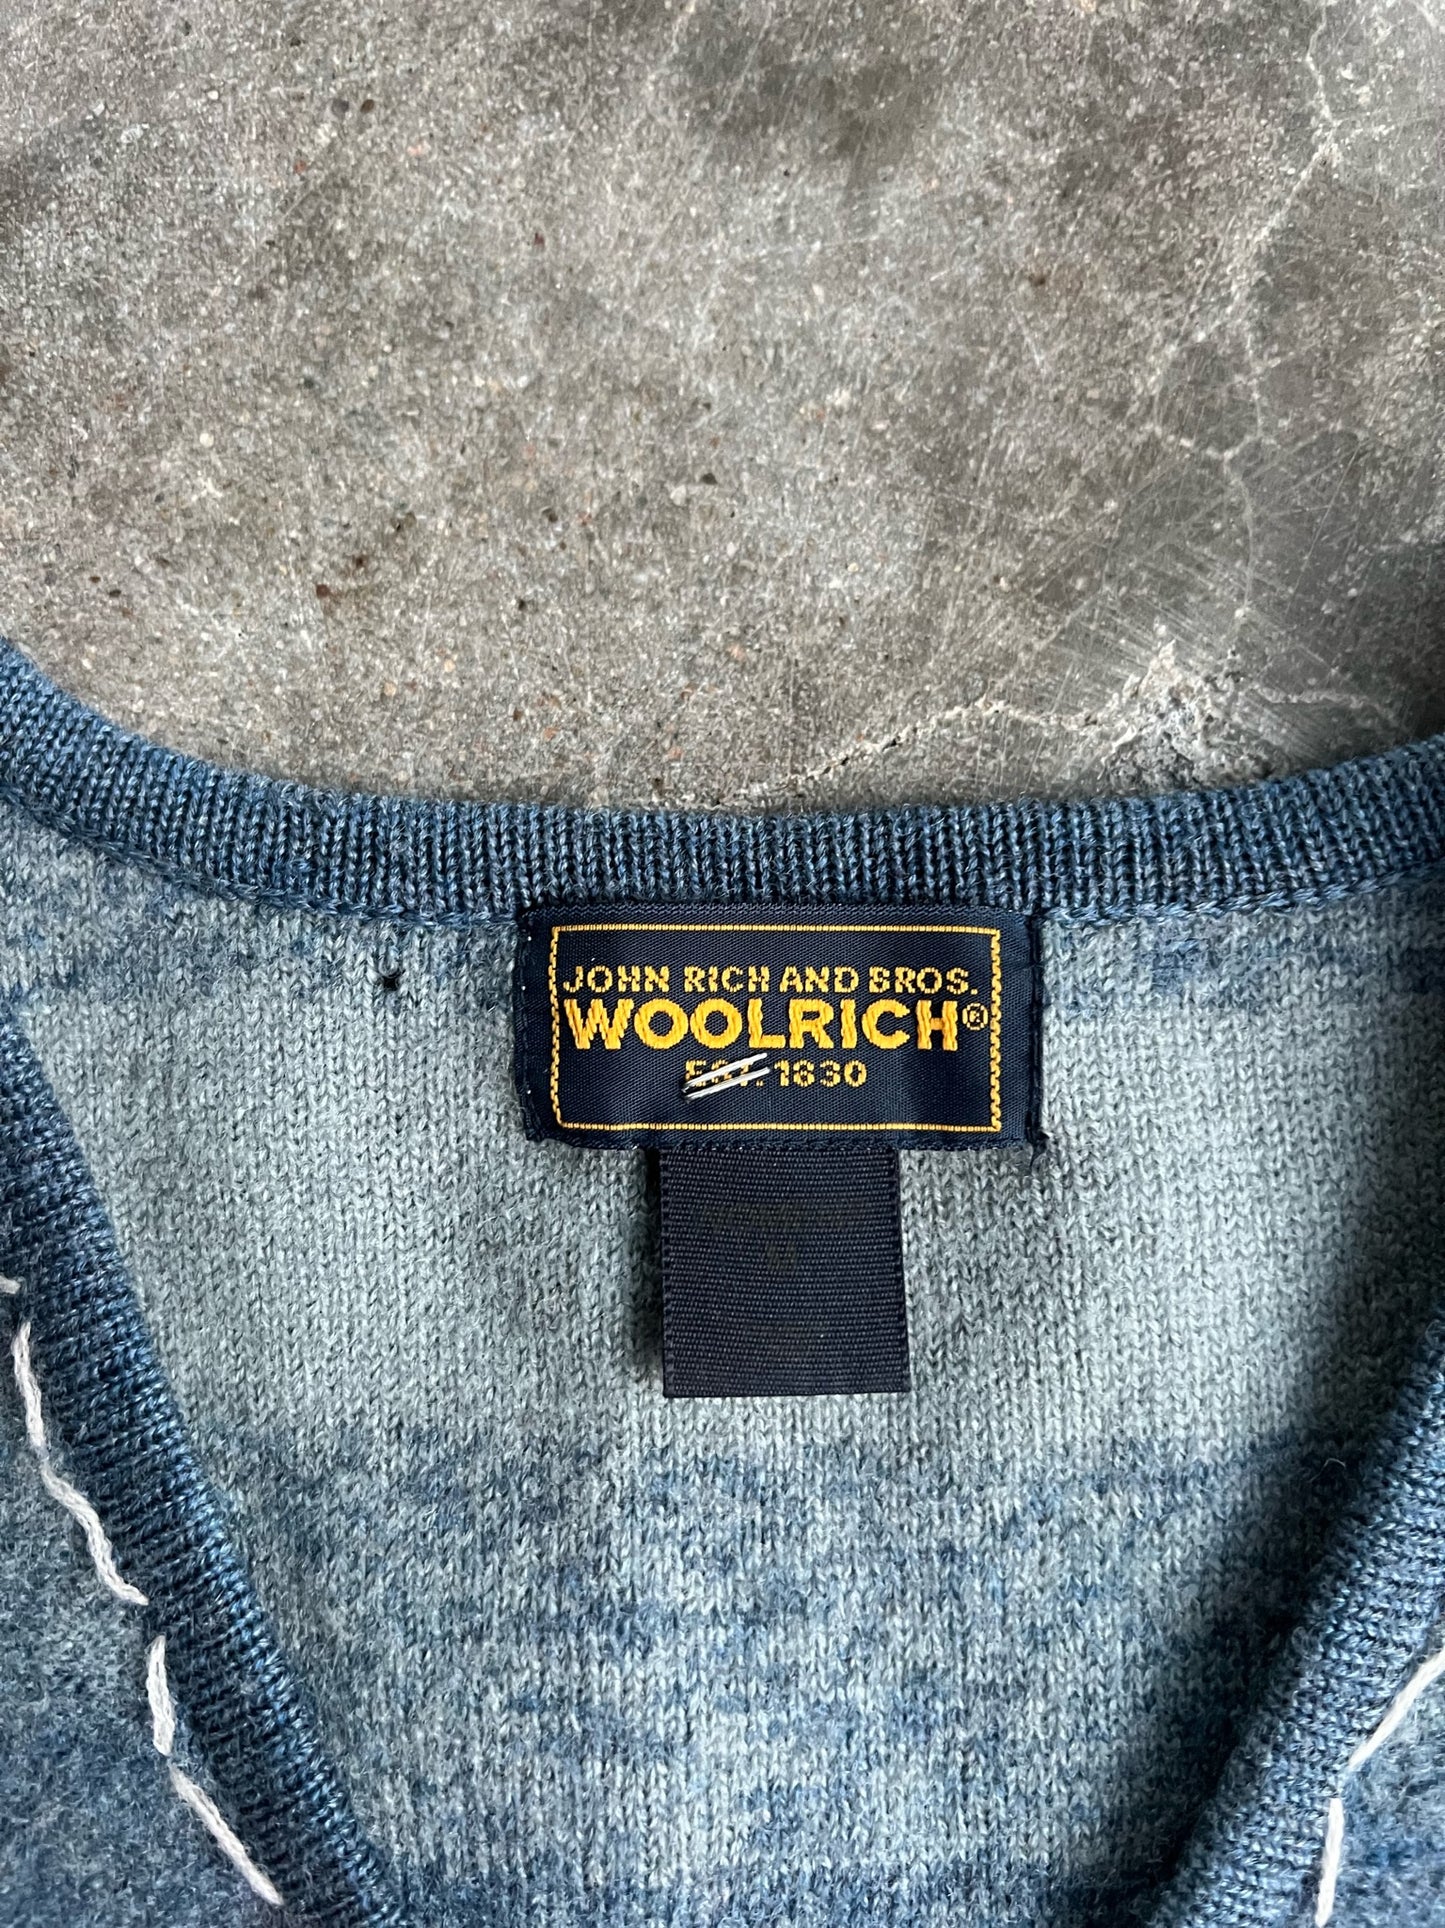 Vintage Woolrich Sweater Vest - S